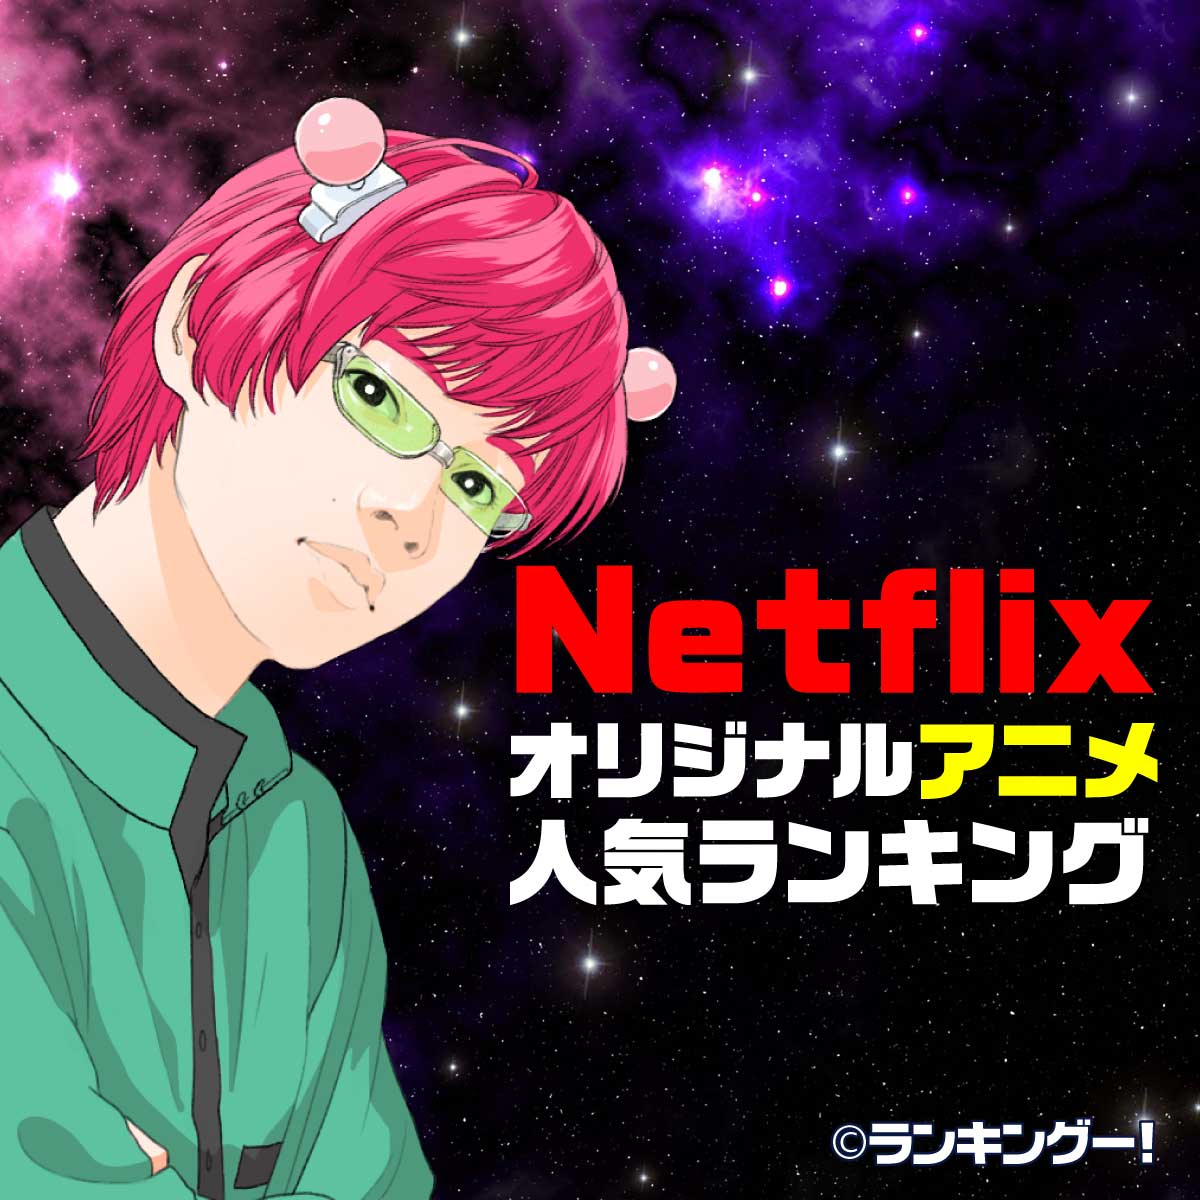 Netflixオリジナル神アニメおすすめランキングtop20 16 20位 ランキングー